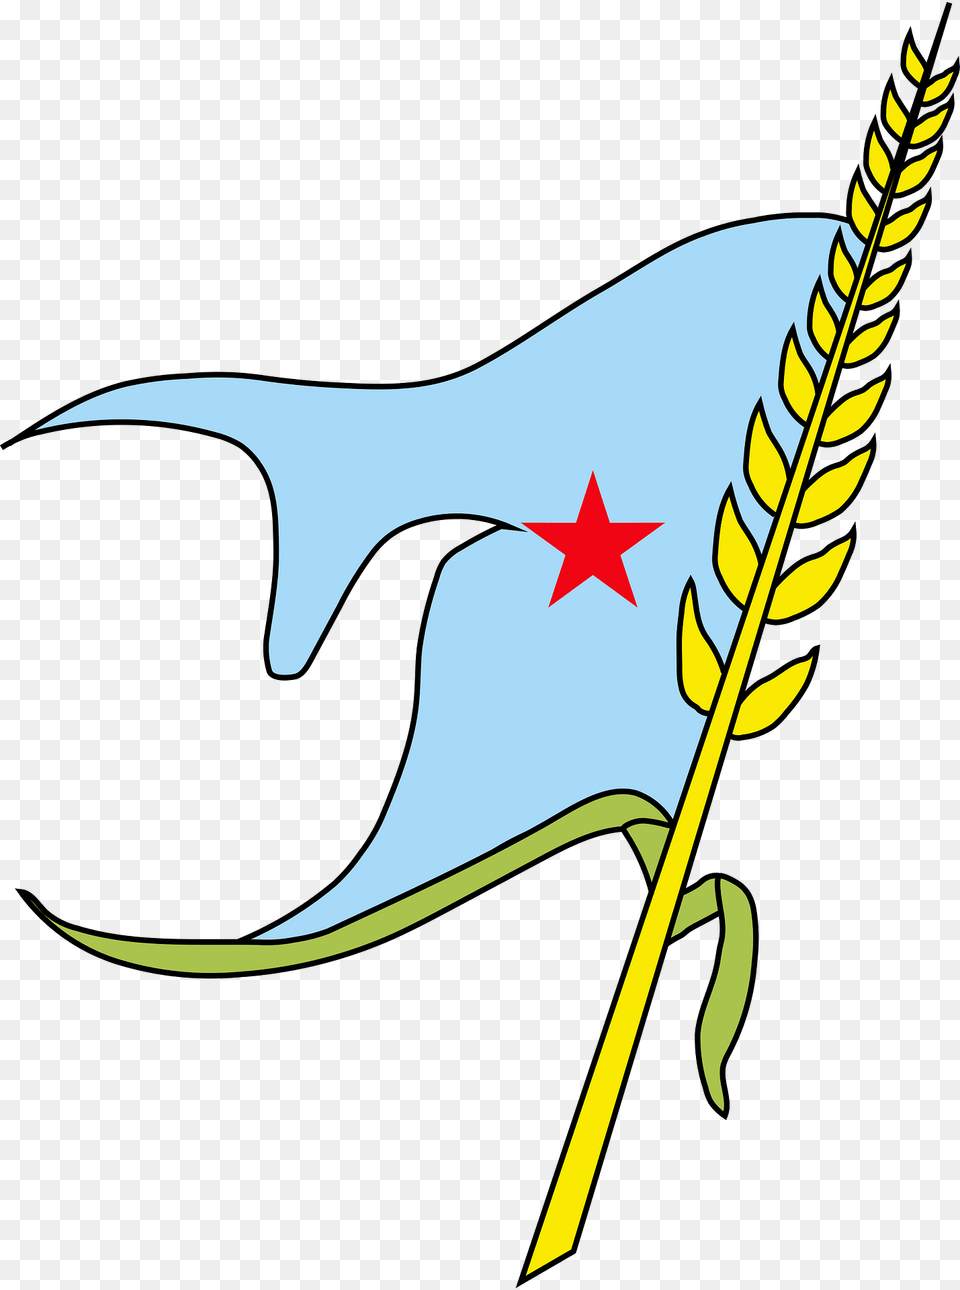 Emblem Of The Yemeni Socialist Party Clipart, Leaf, Plant, Symbol, Animal Free Png Download